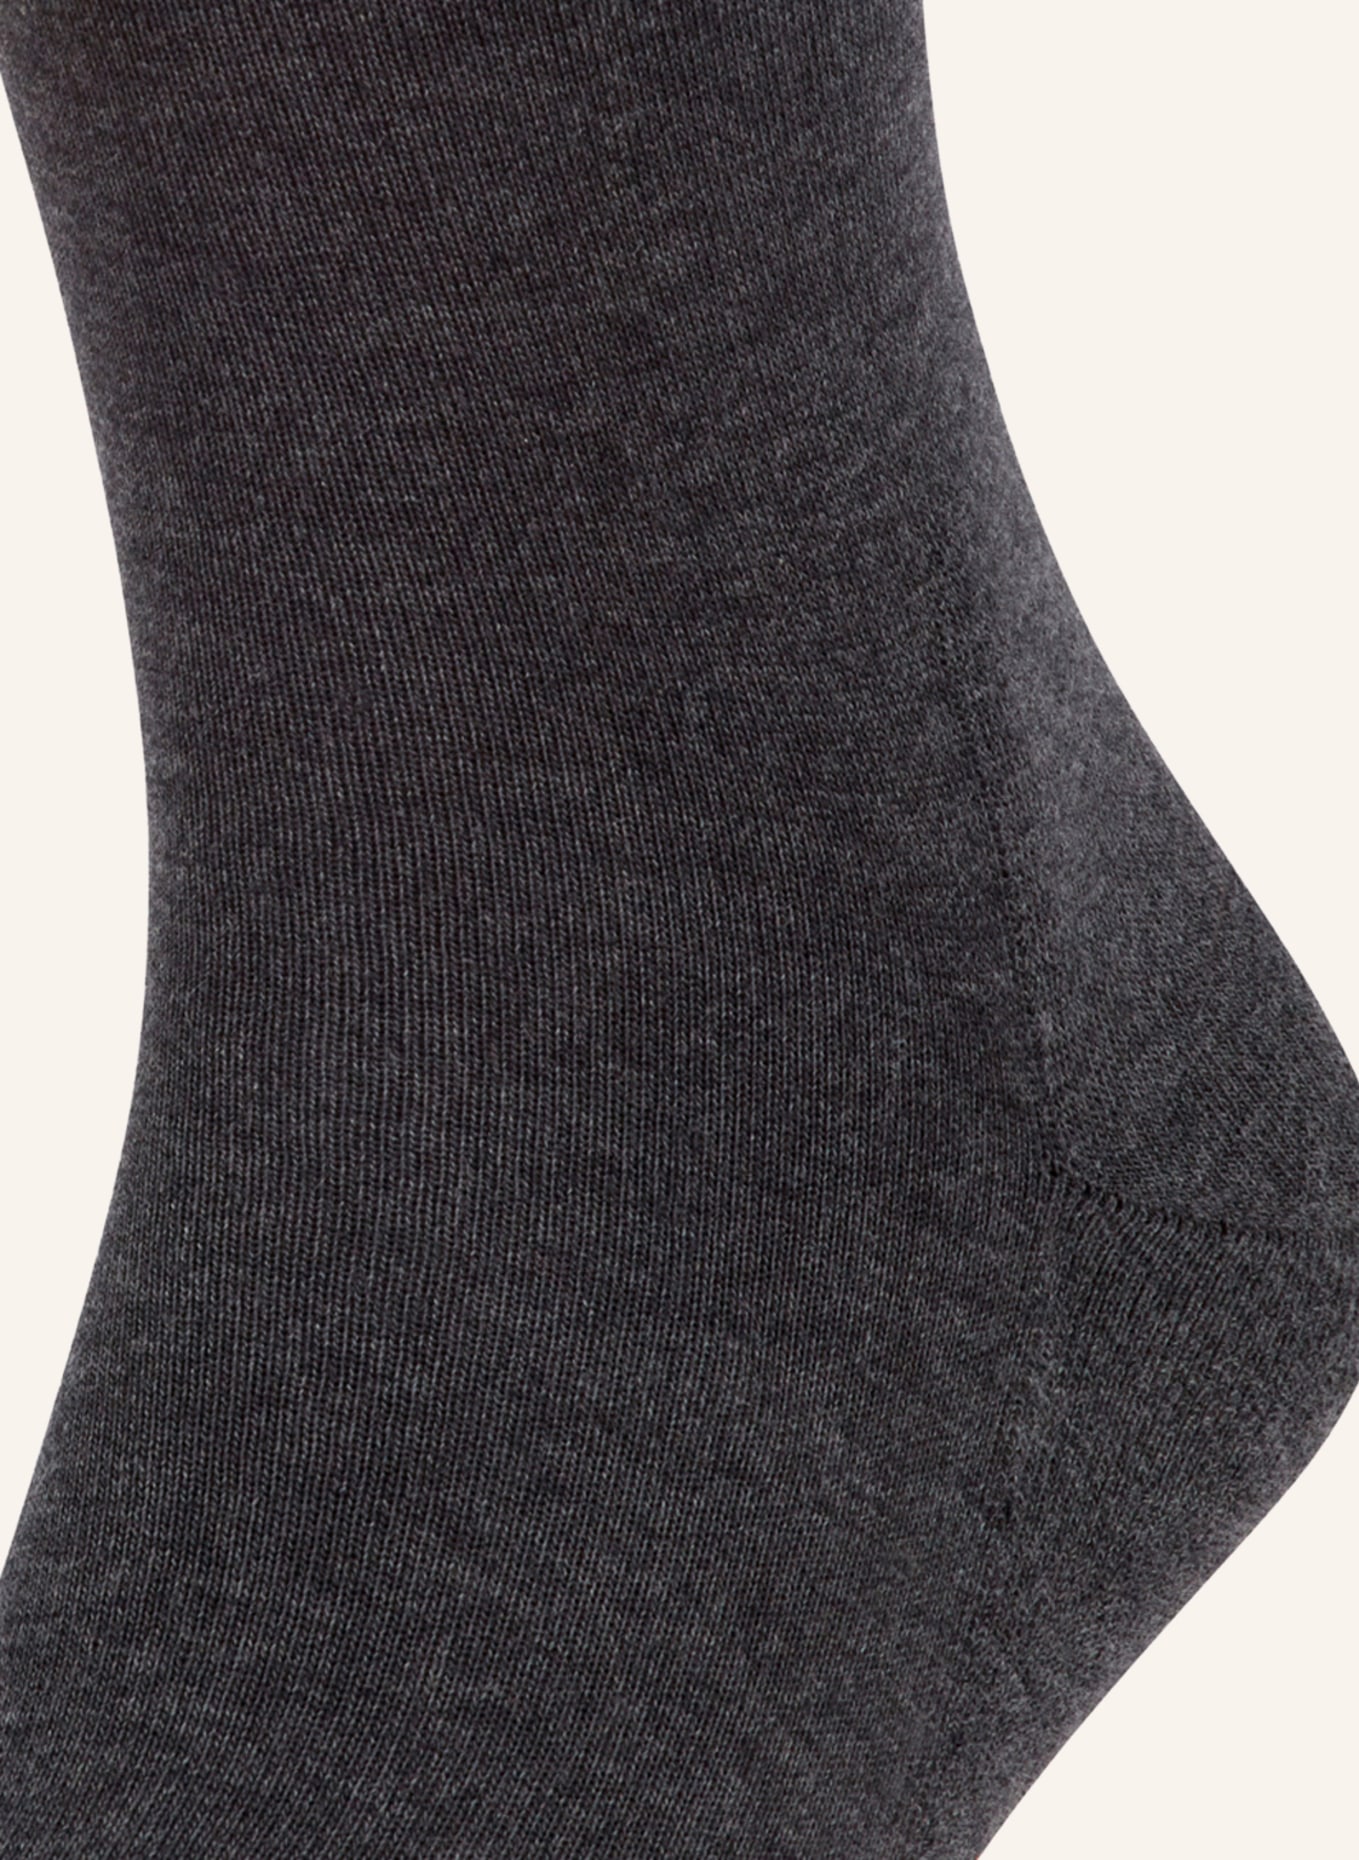 FALKE Socken RUN ERGO, Farbe: 3970 DARK GREY (Bild 3)